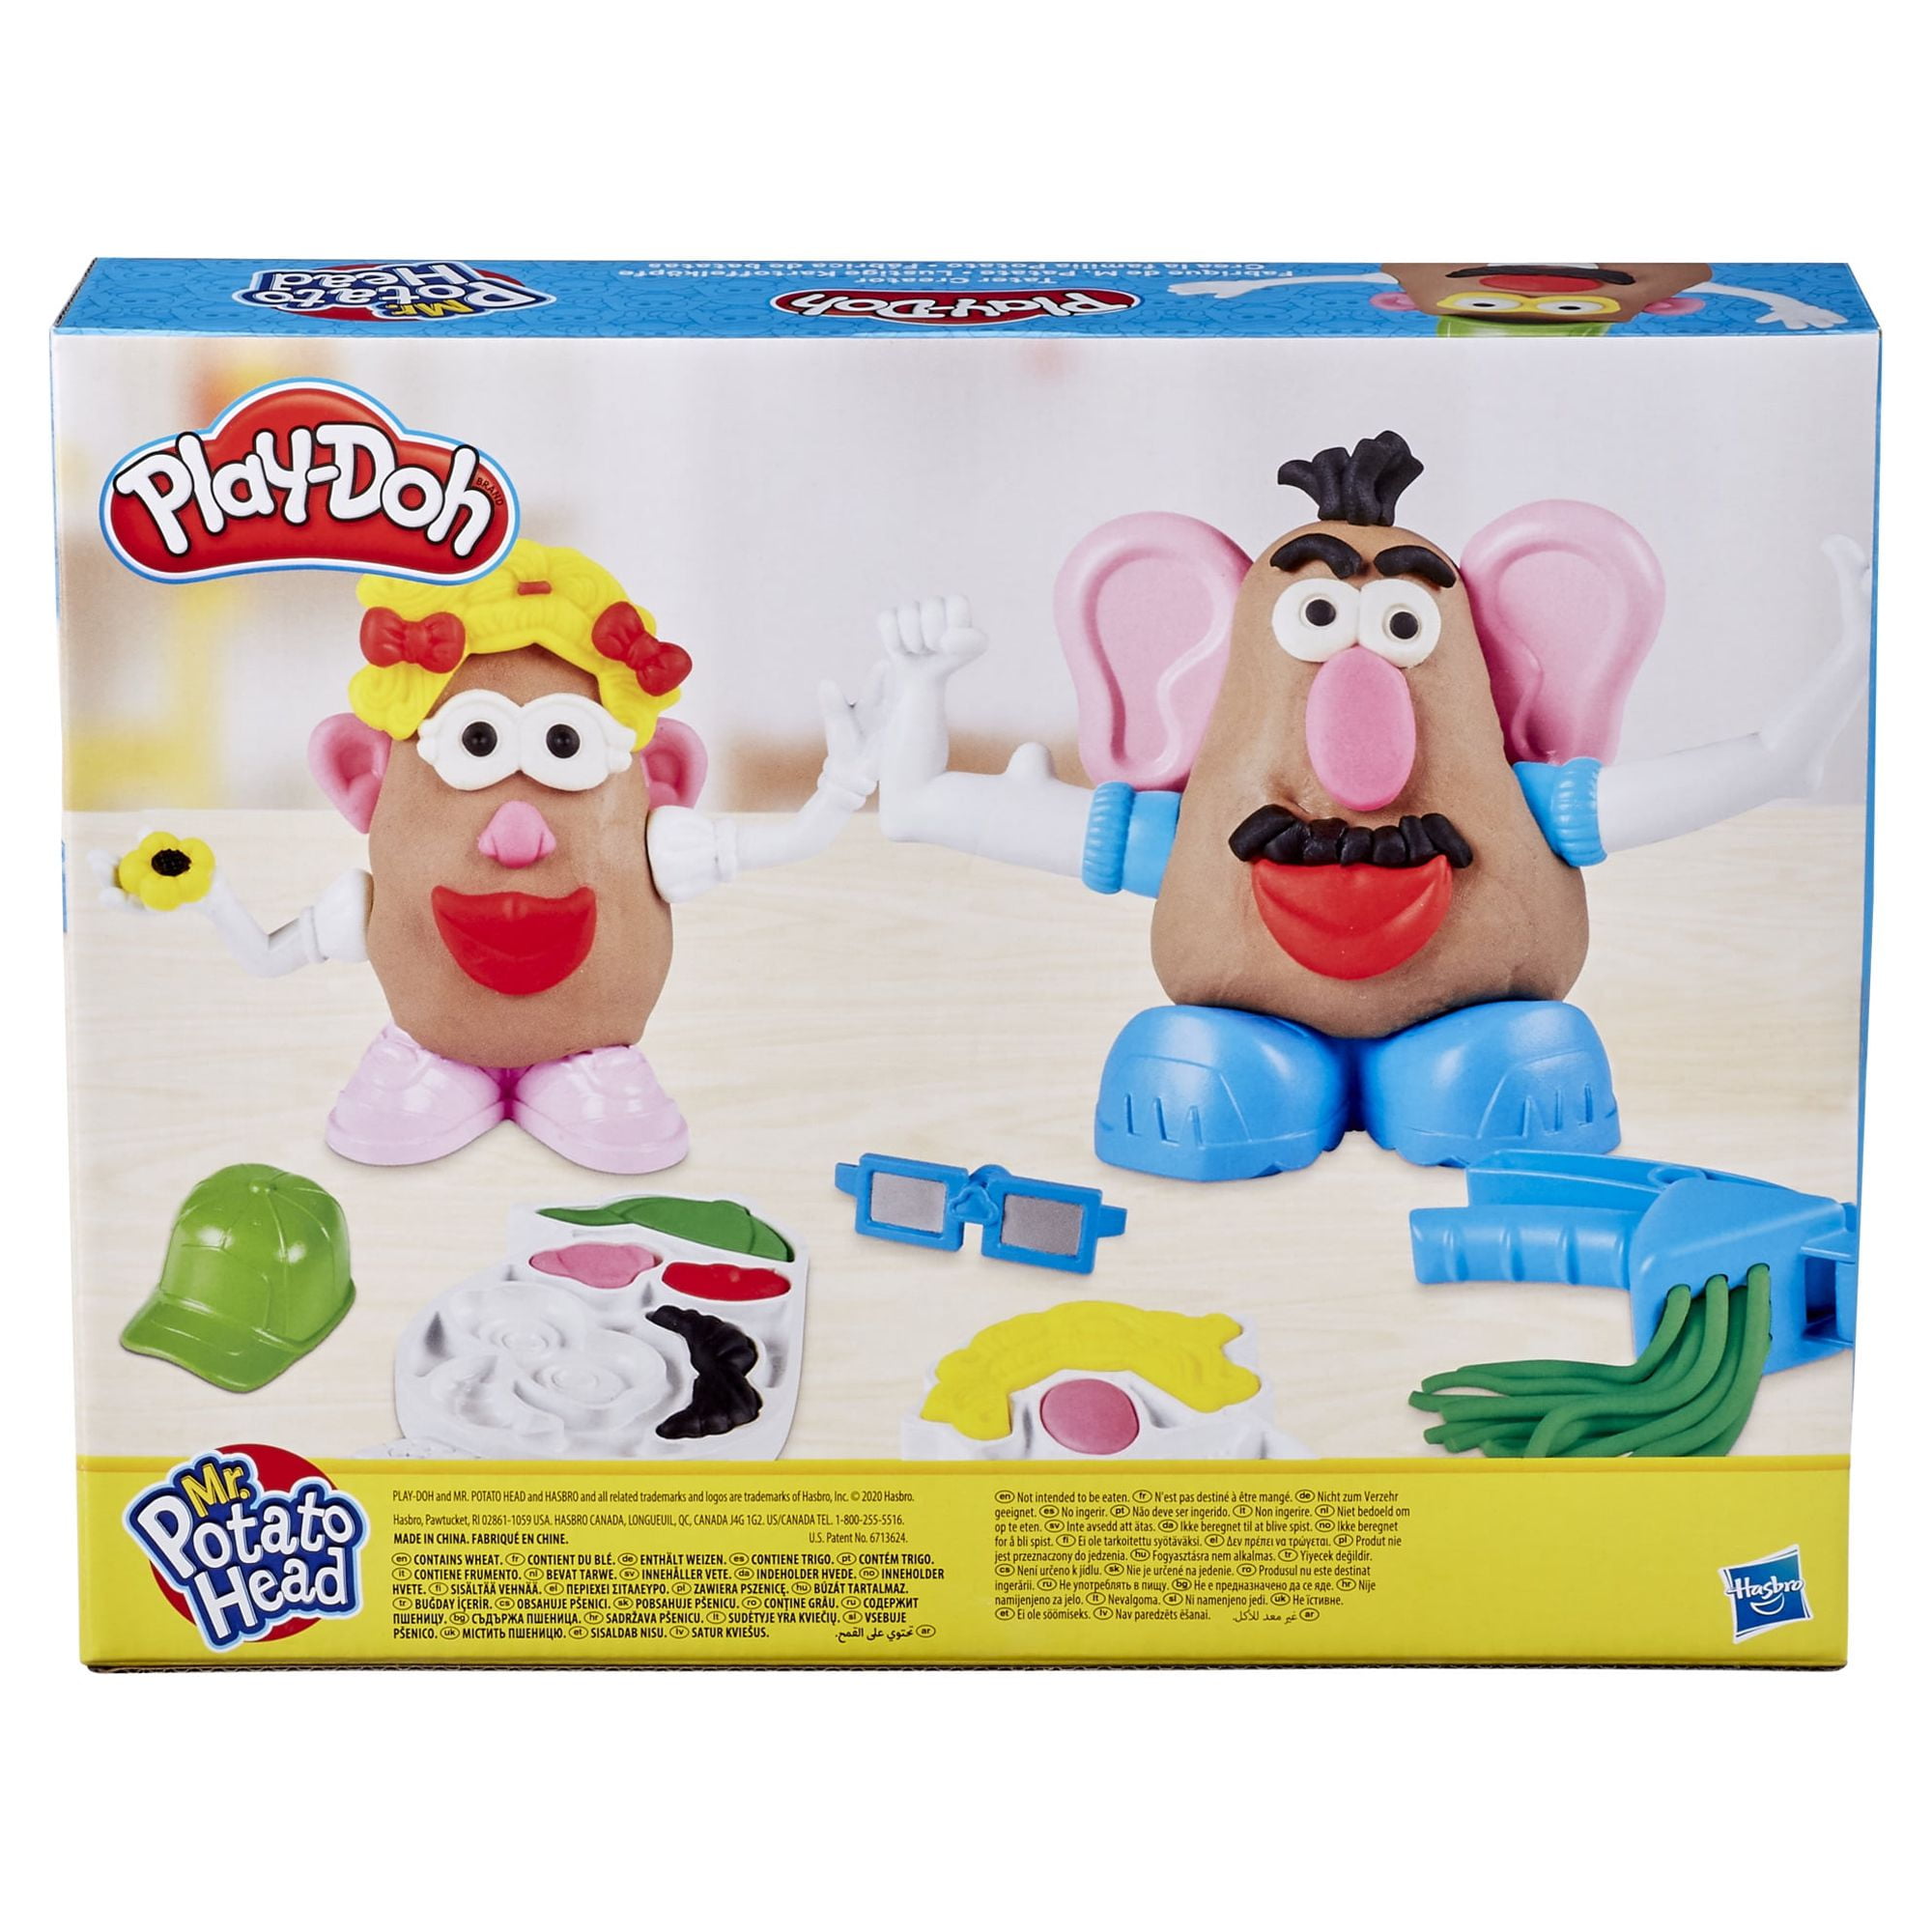 Homemade Play Dough Activity with Mr. Potato Head - Happy Hooligans